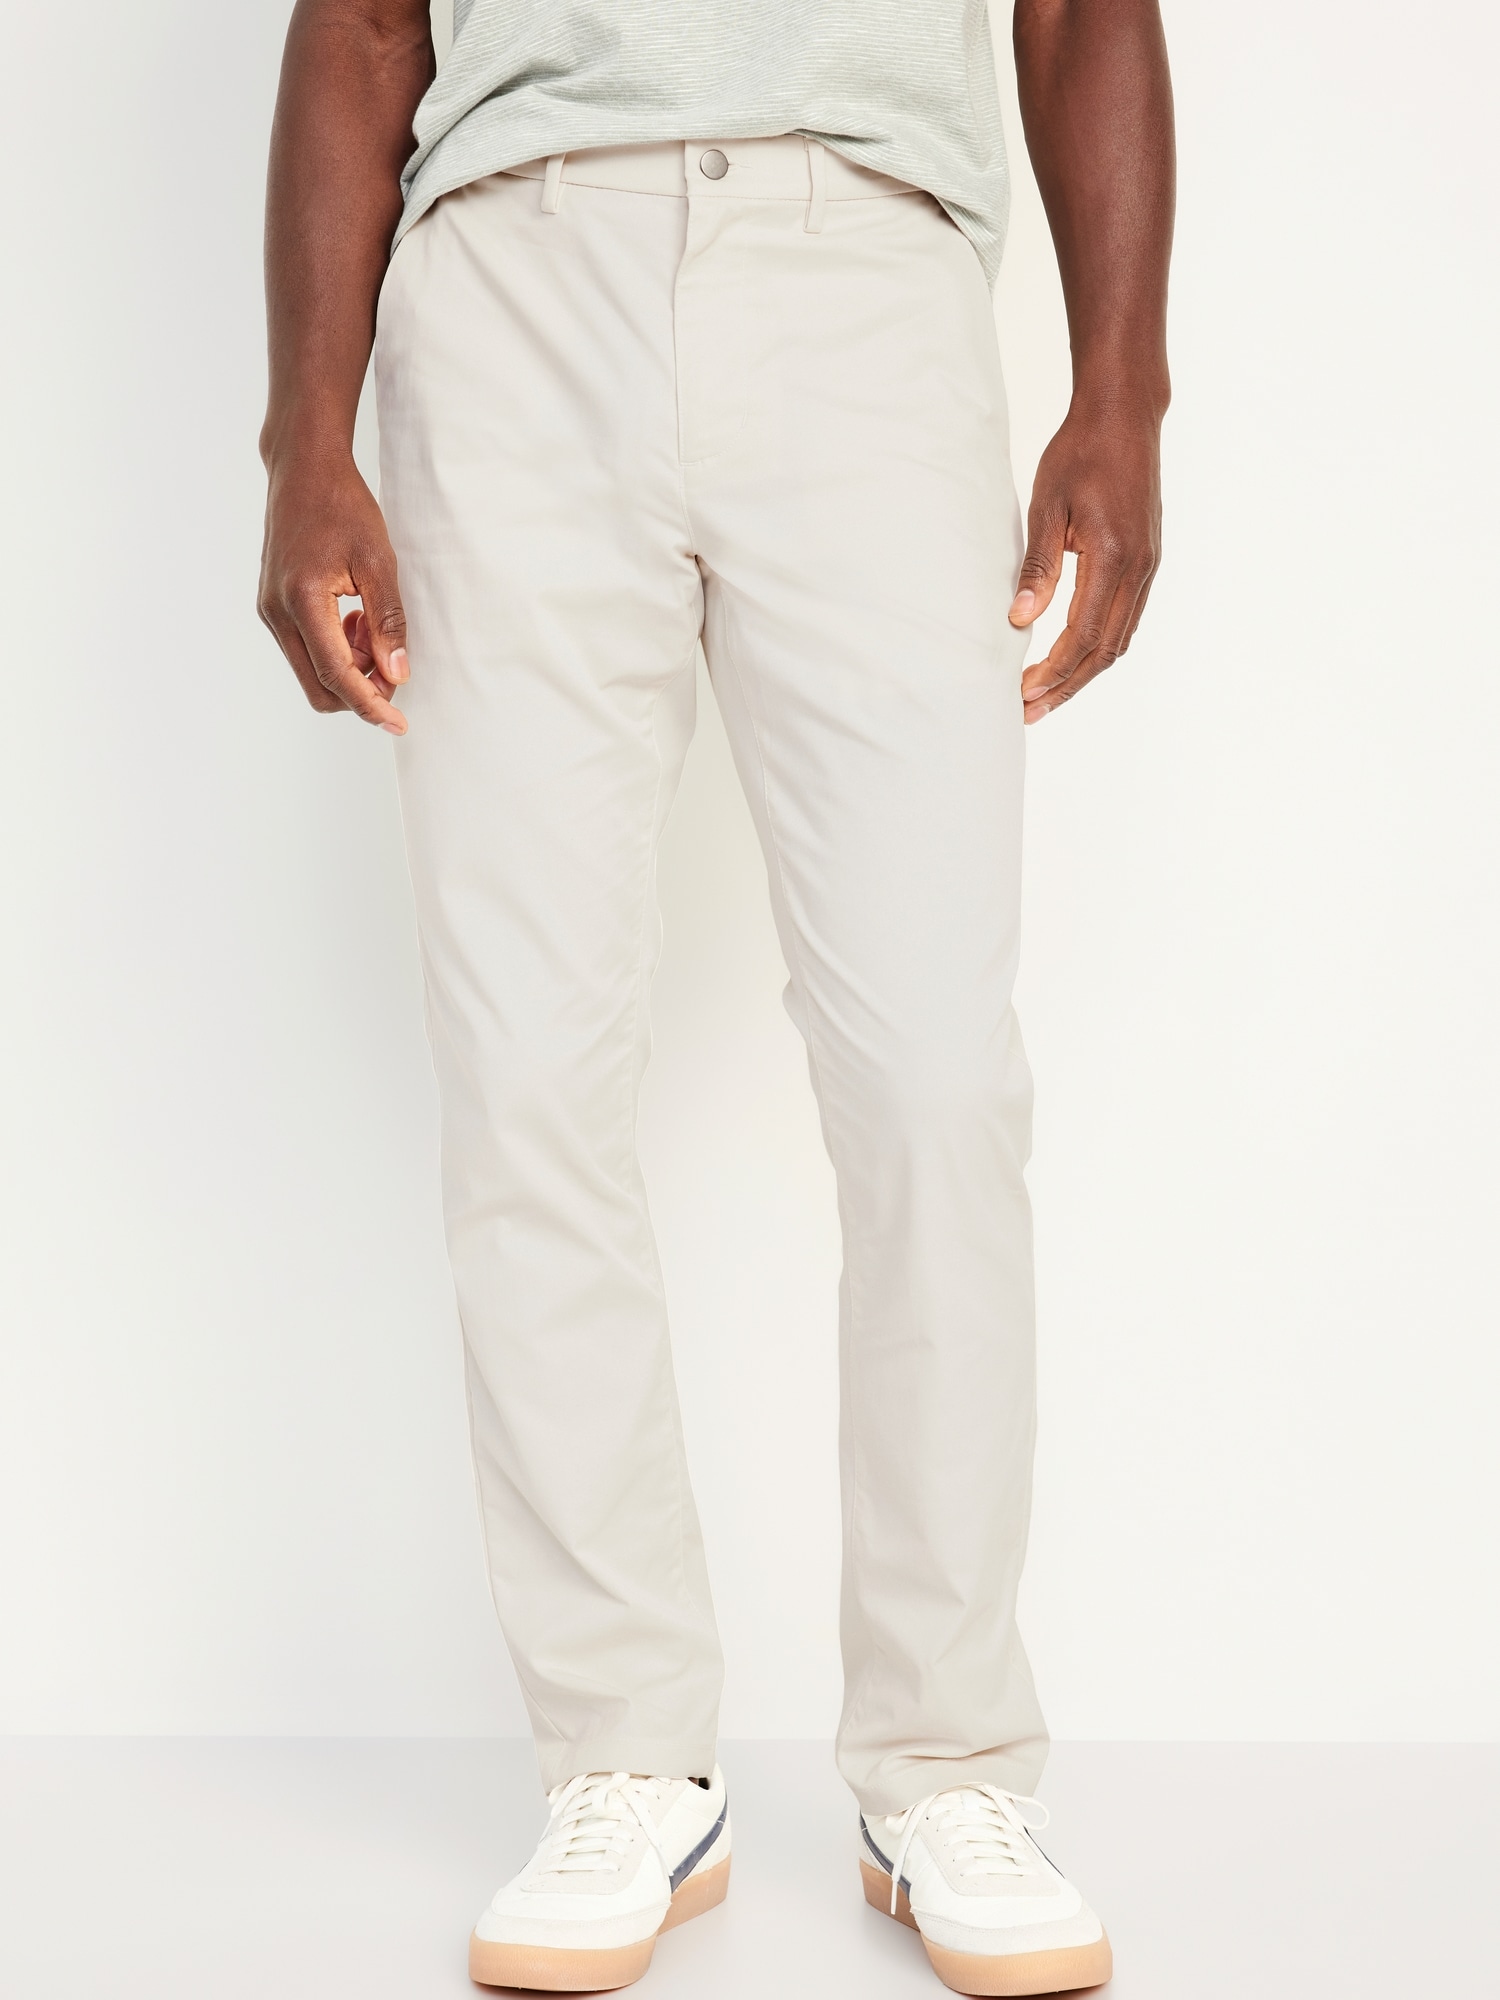 Polo Ralph Lauren Slim Fit Performance Stretch Chino Pants | Dillard's